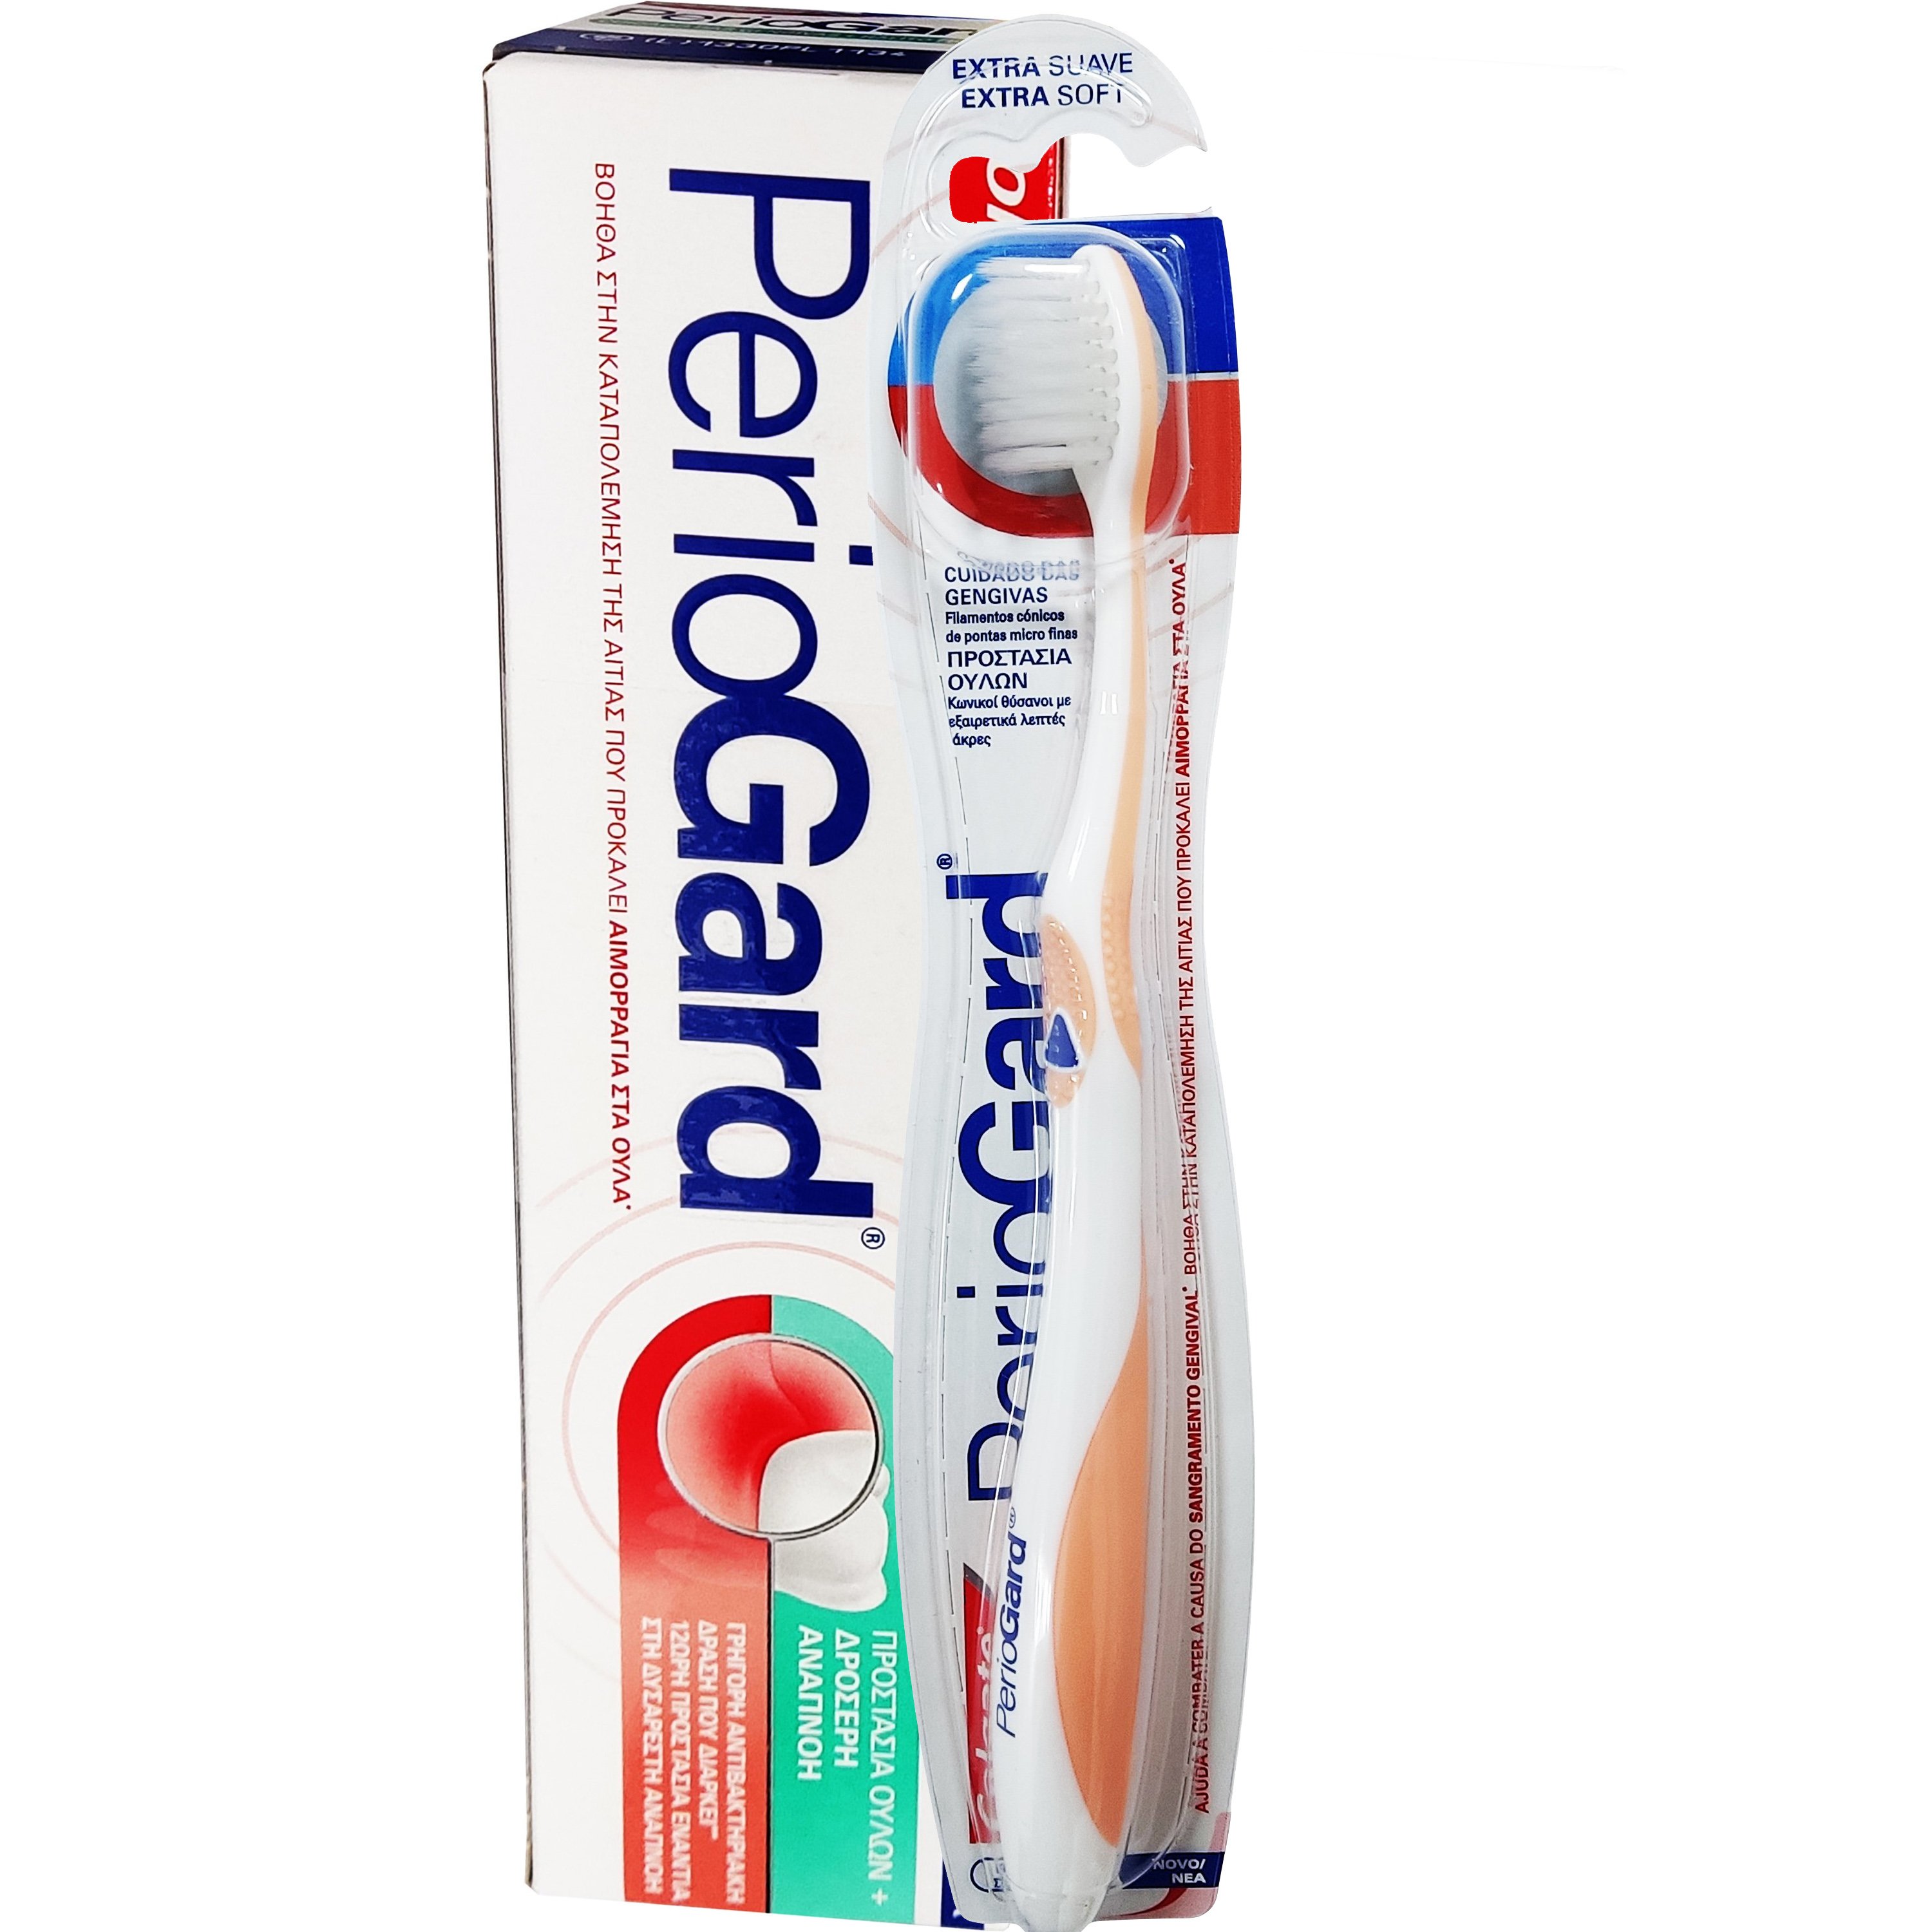 Colgate Periogard Πακέτο Προσφοράς Toothpaste Οδοντόκρεμα 75ml & Toothbrush Οδοντόβουρτσα Soft σε Ειδική Τιμή